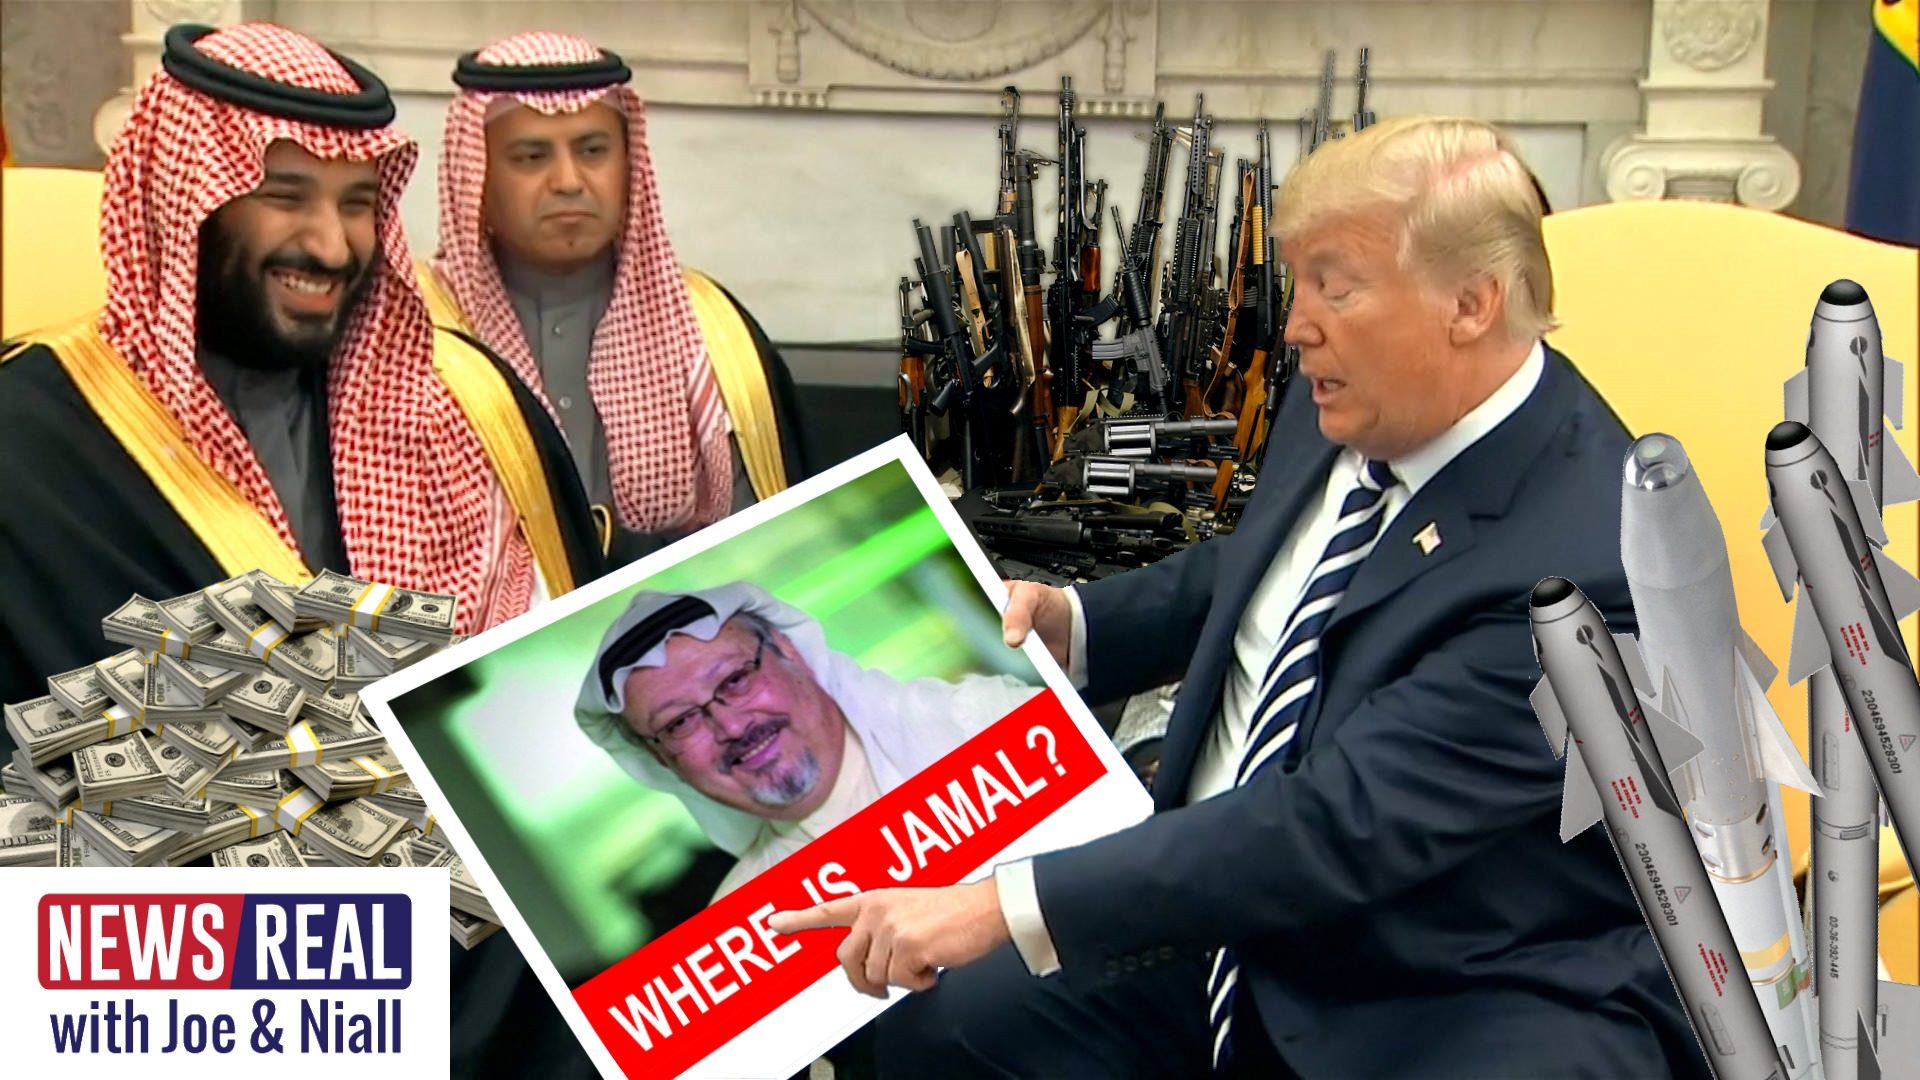 newsreal trump jamal khashoggi saudi arabia